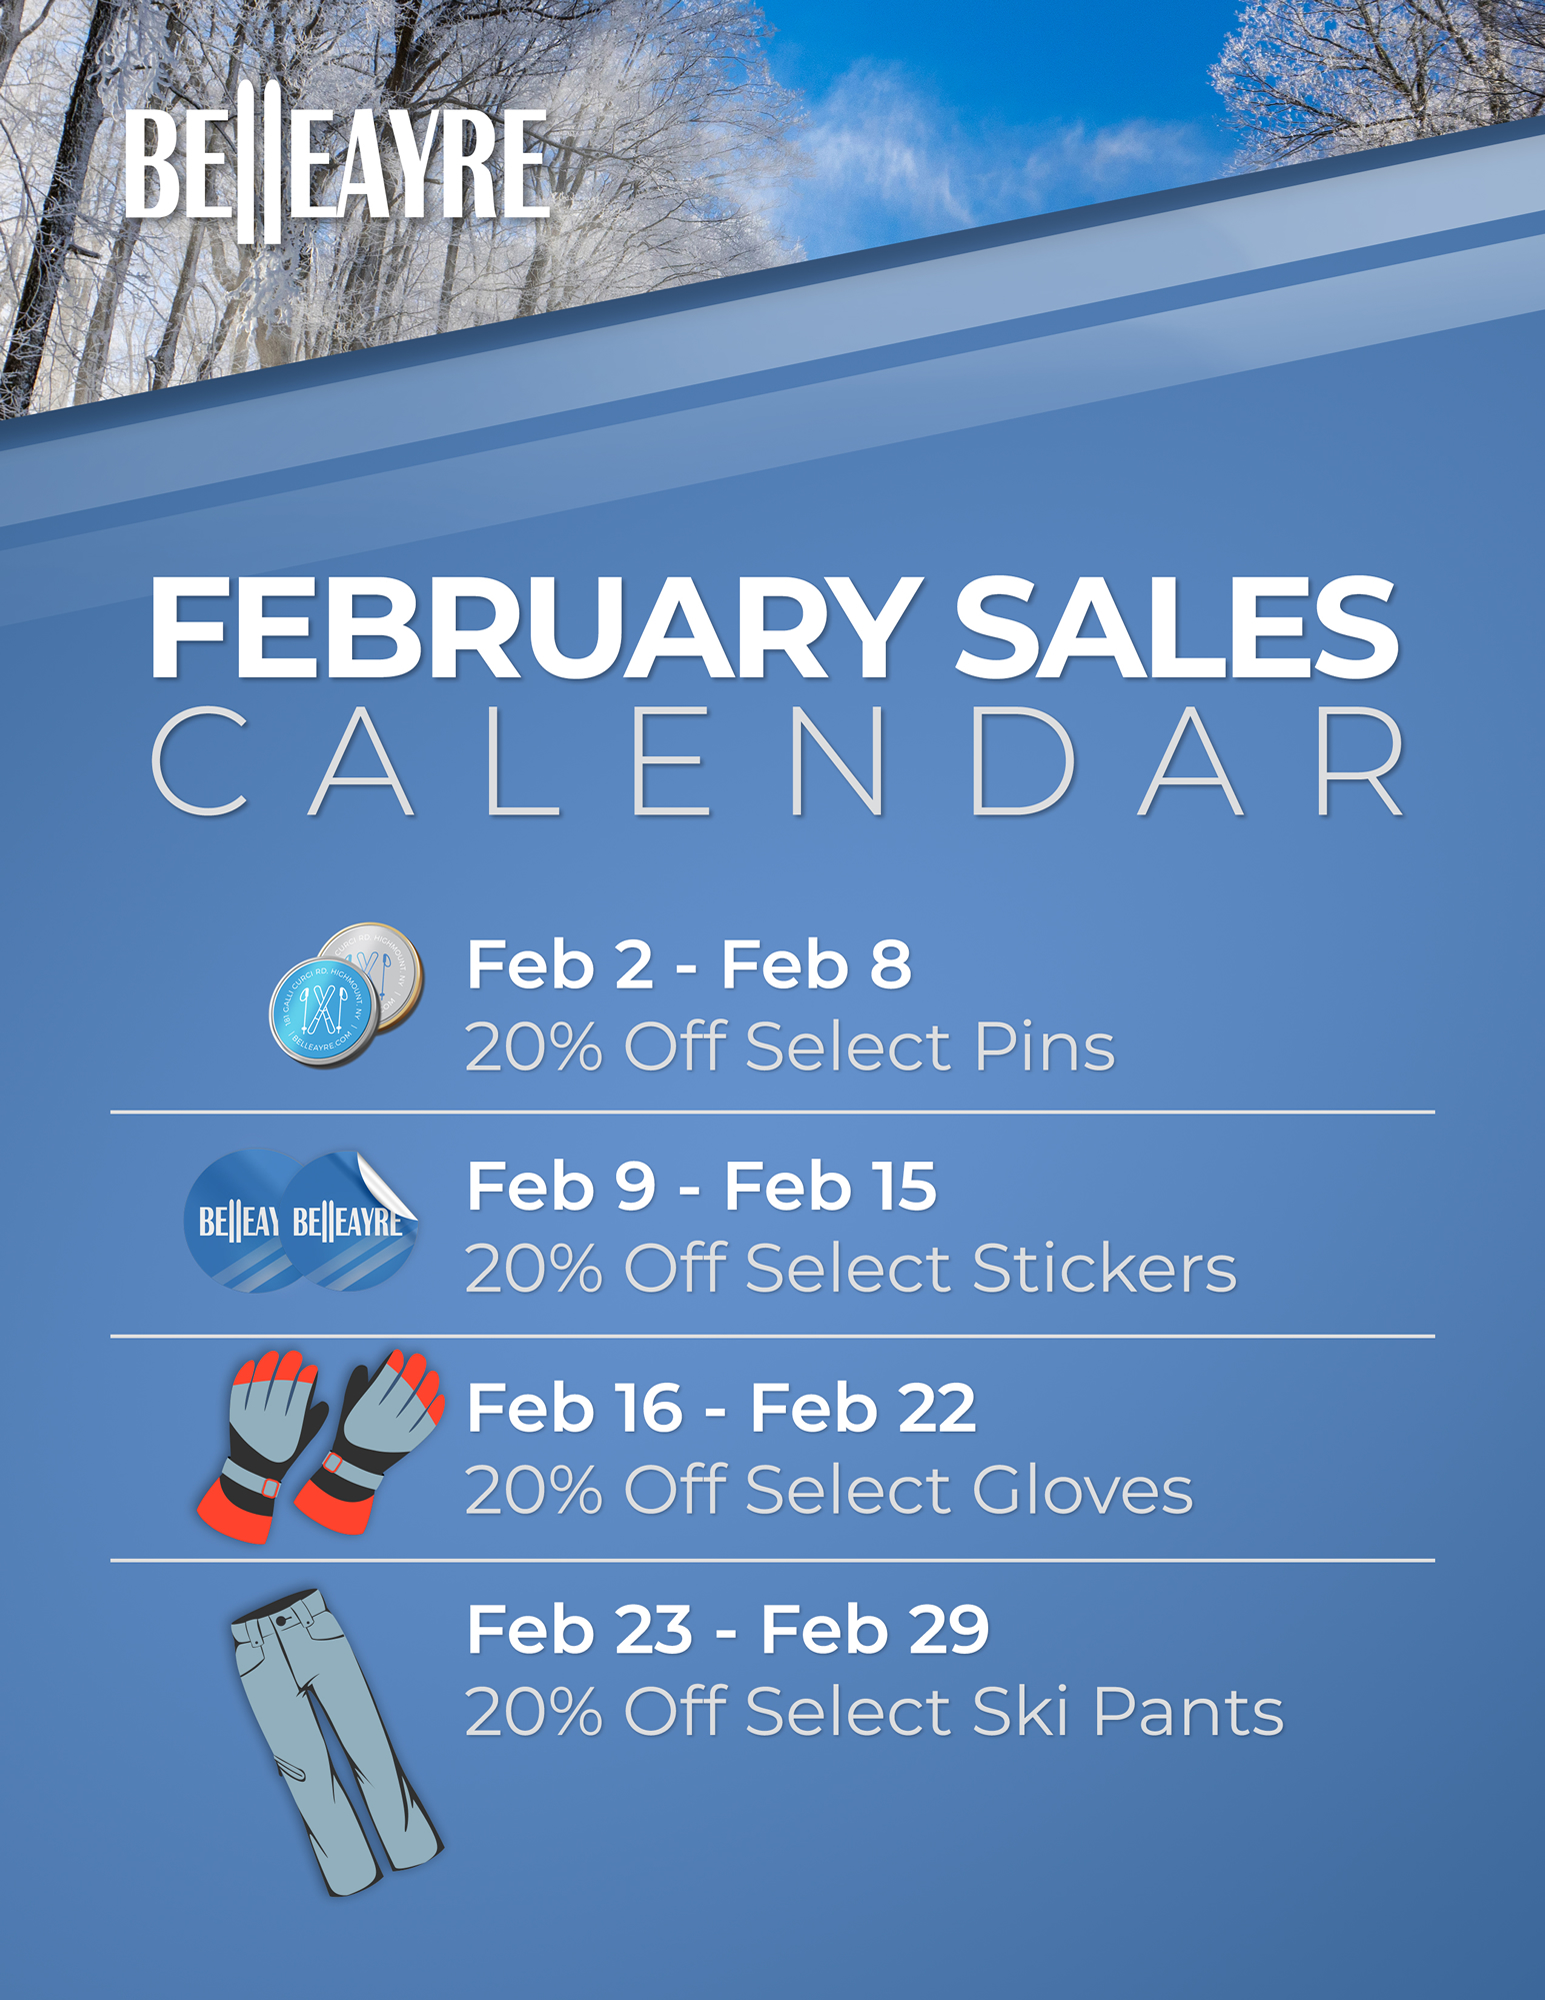 February Sales Calendar